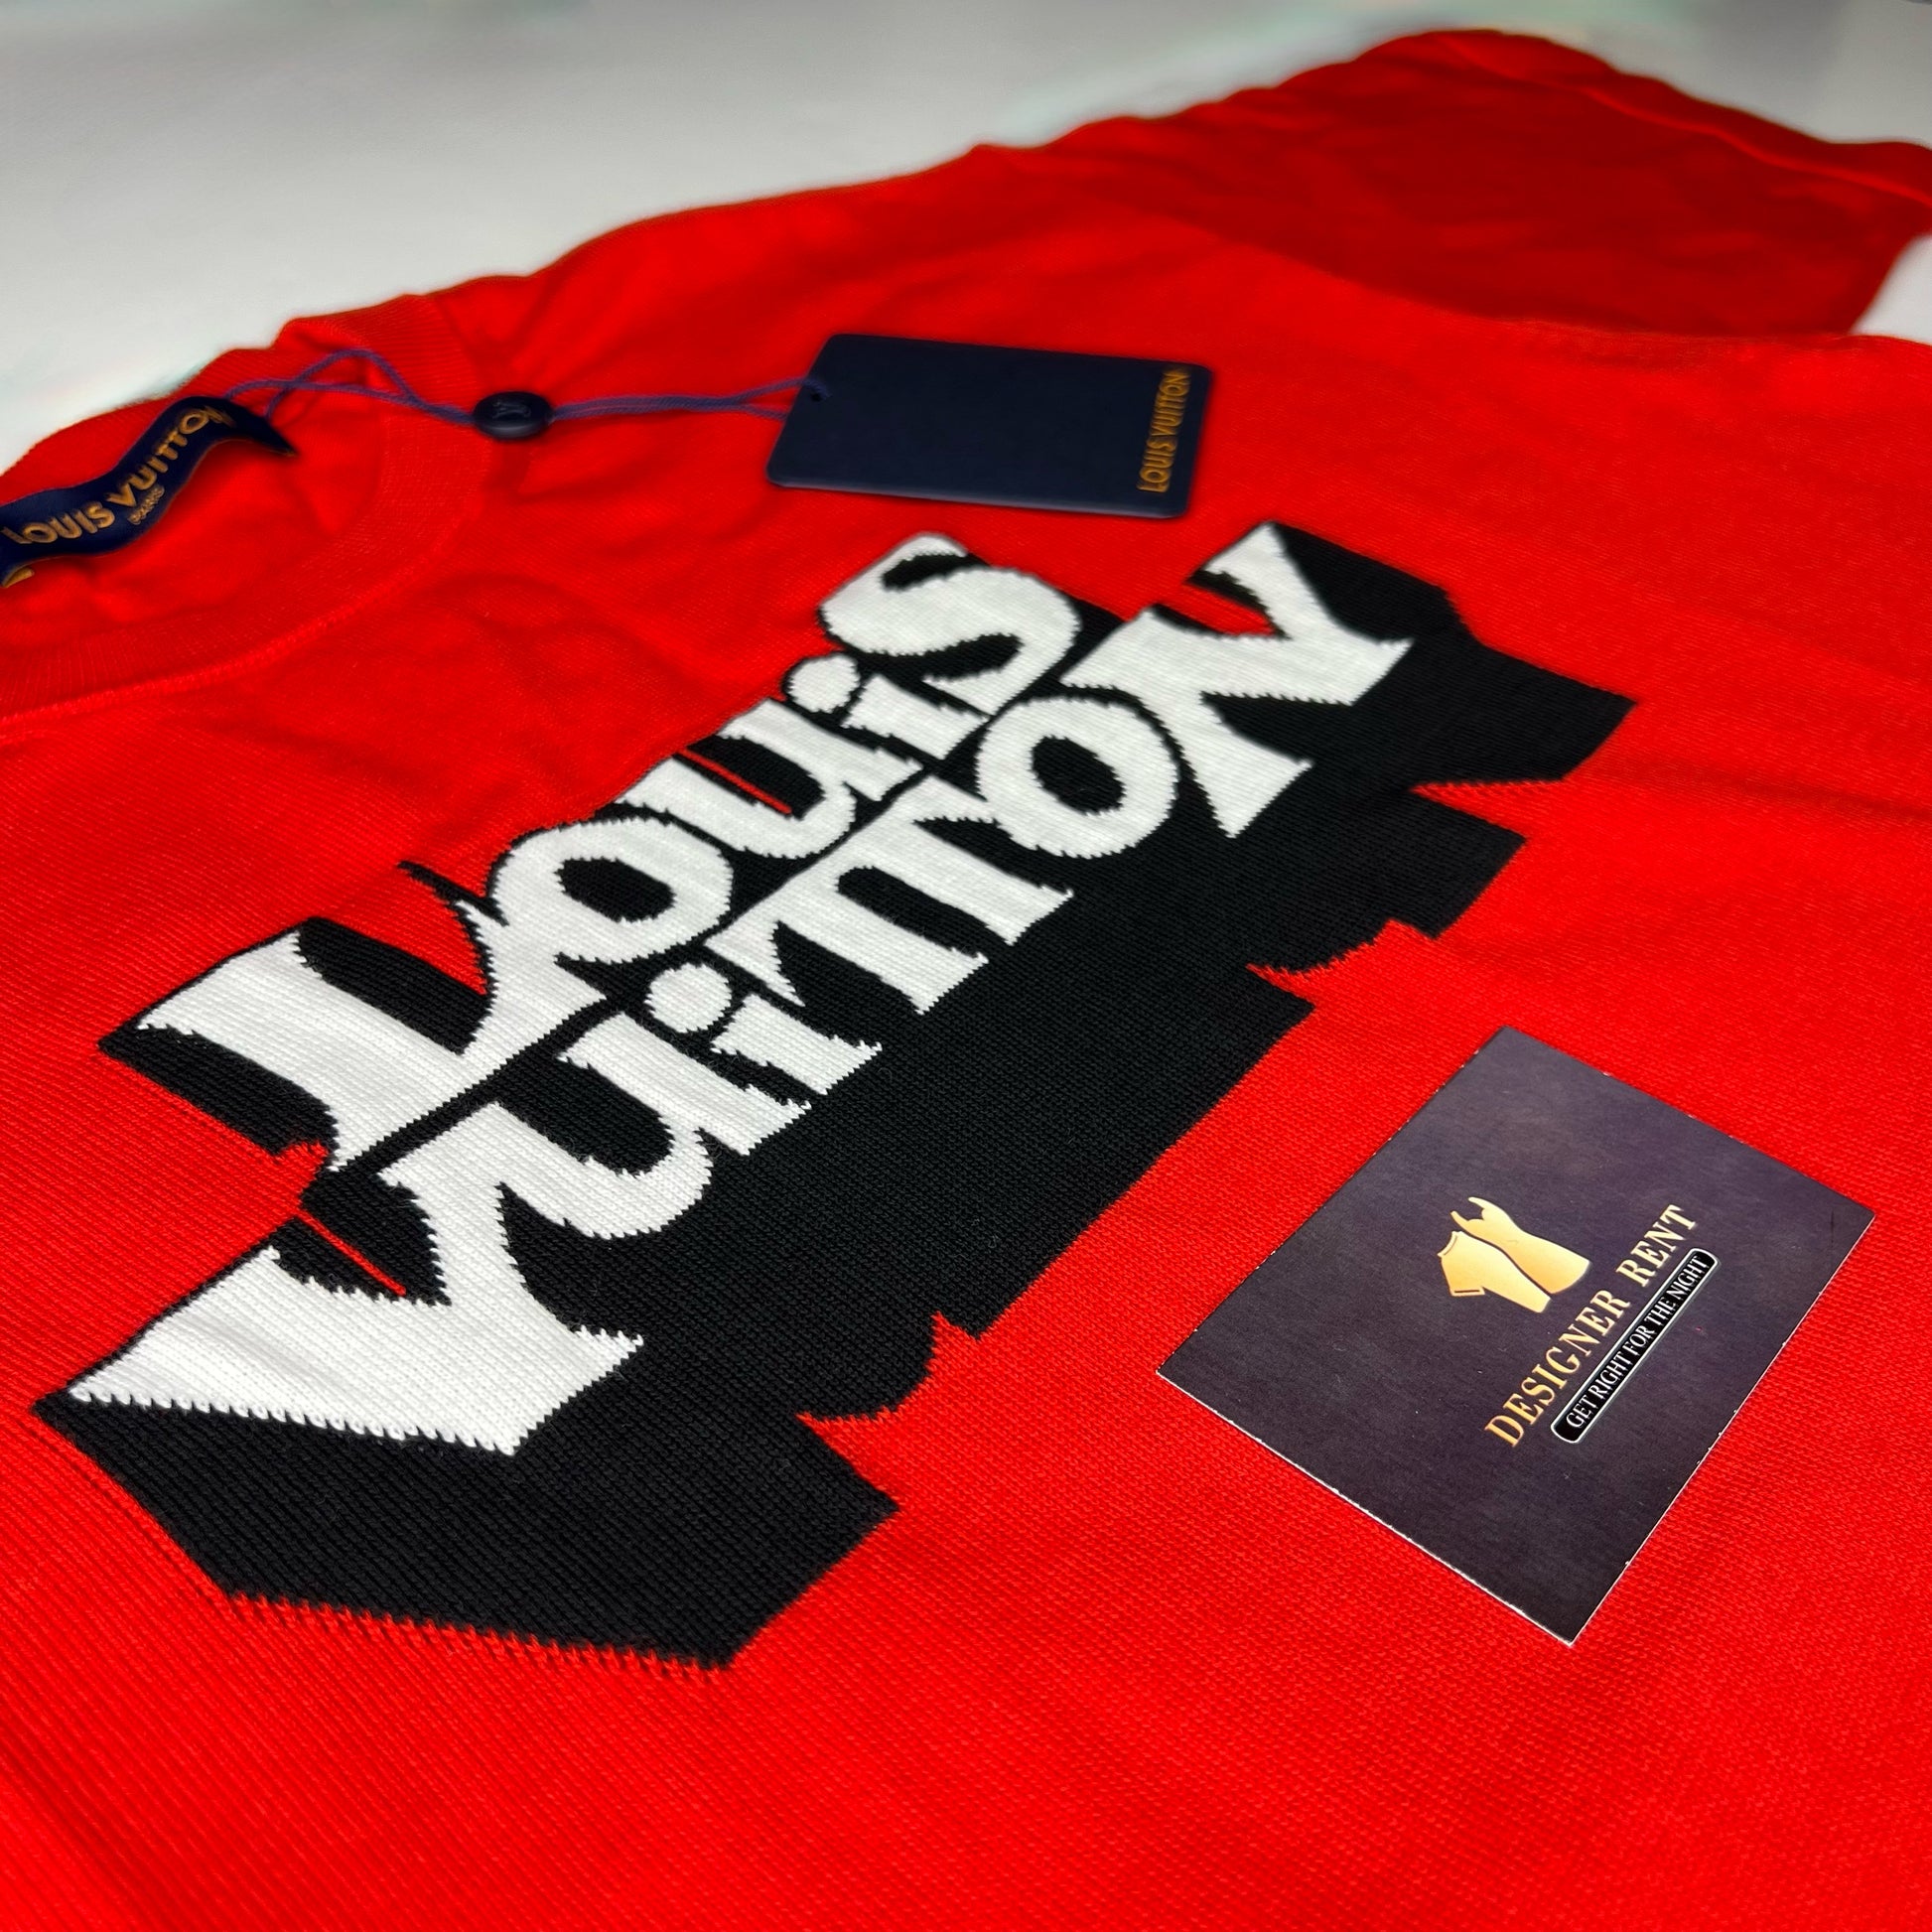 Louis Vuitton Graphic Short-sleeved Cotton Shirt